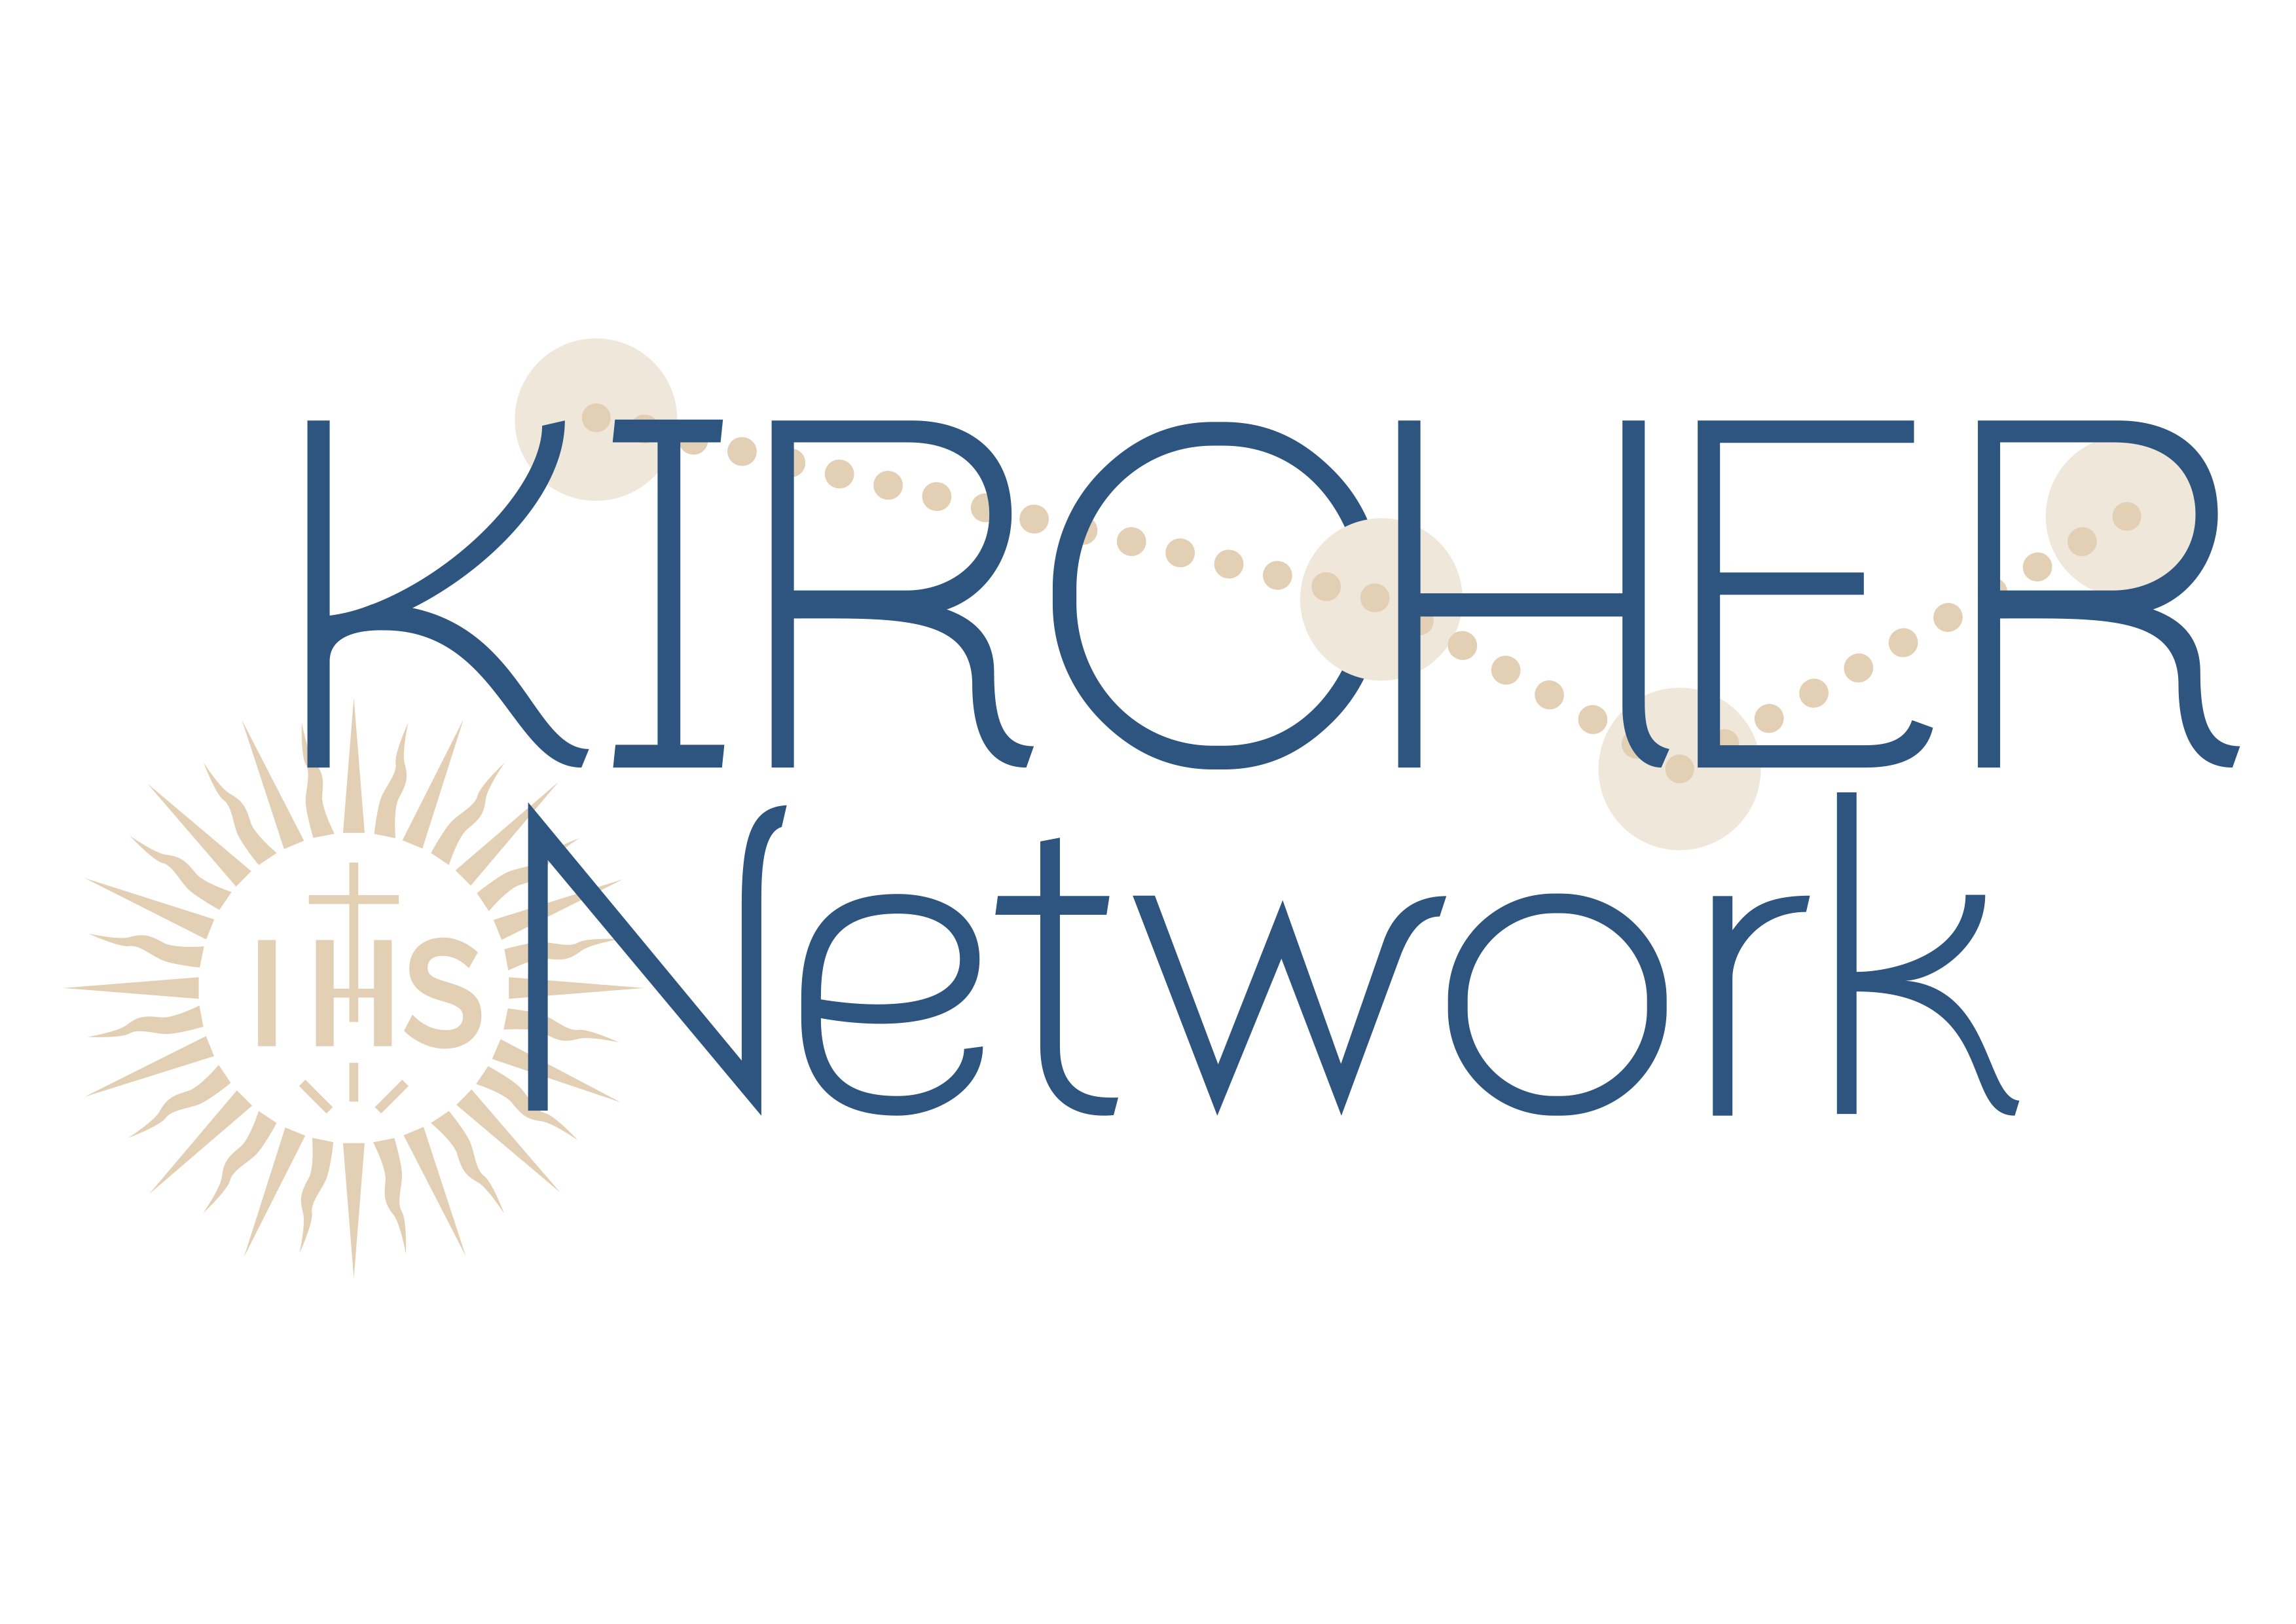 Kircher Network